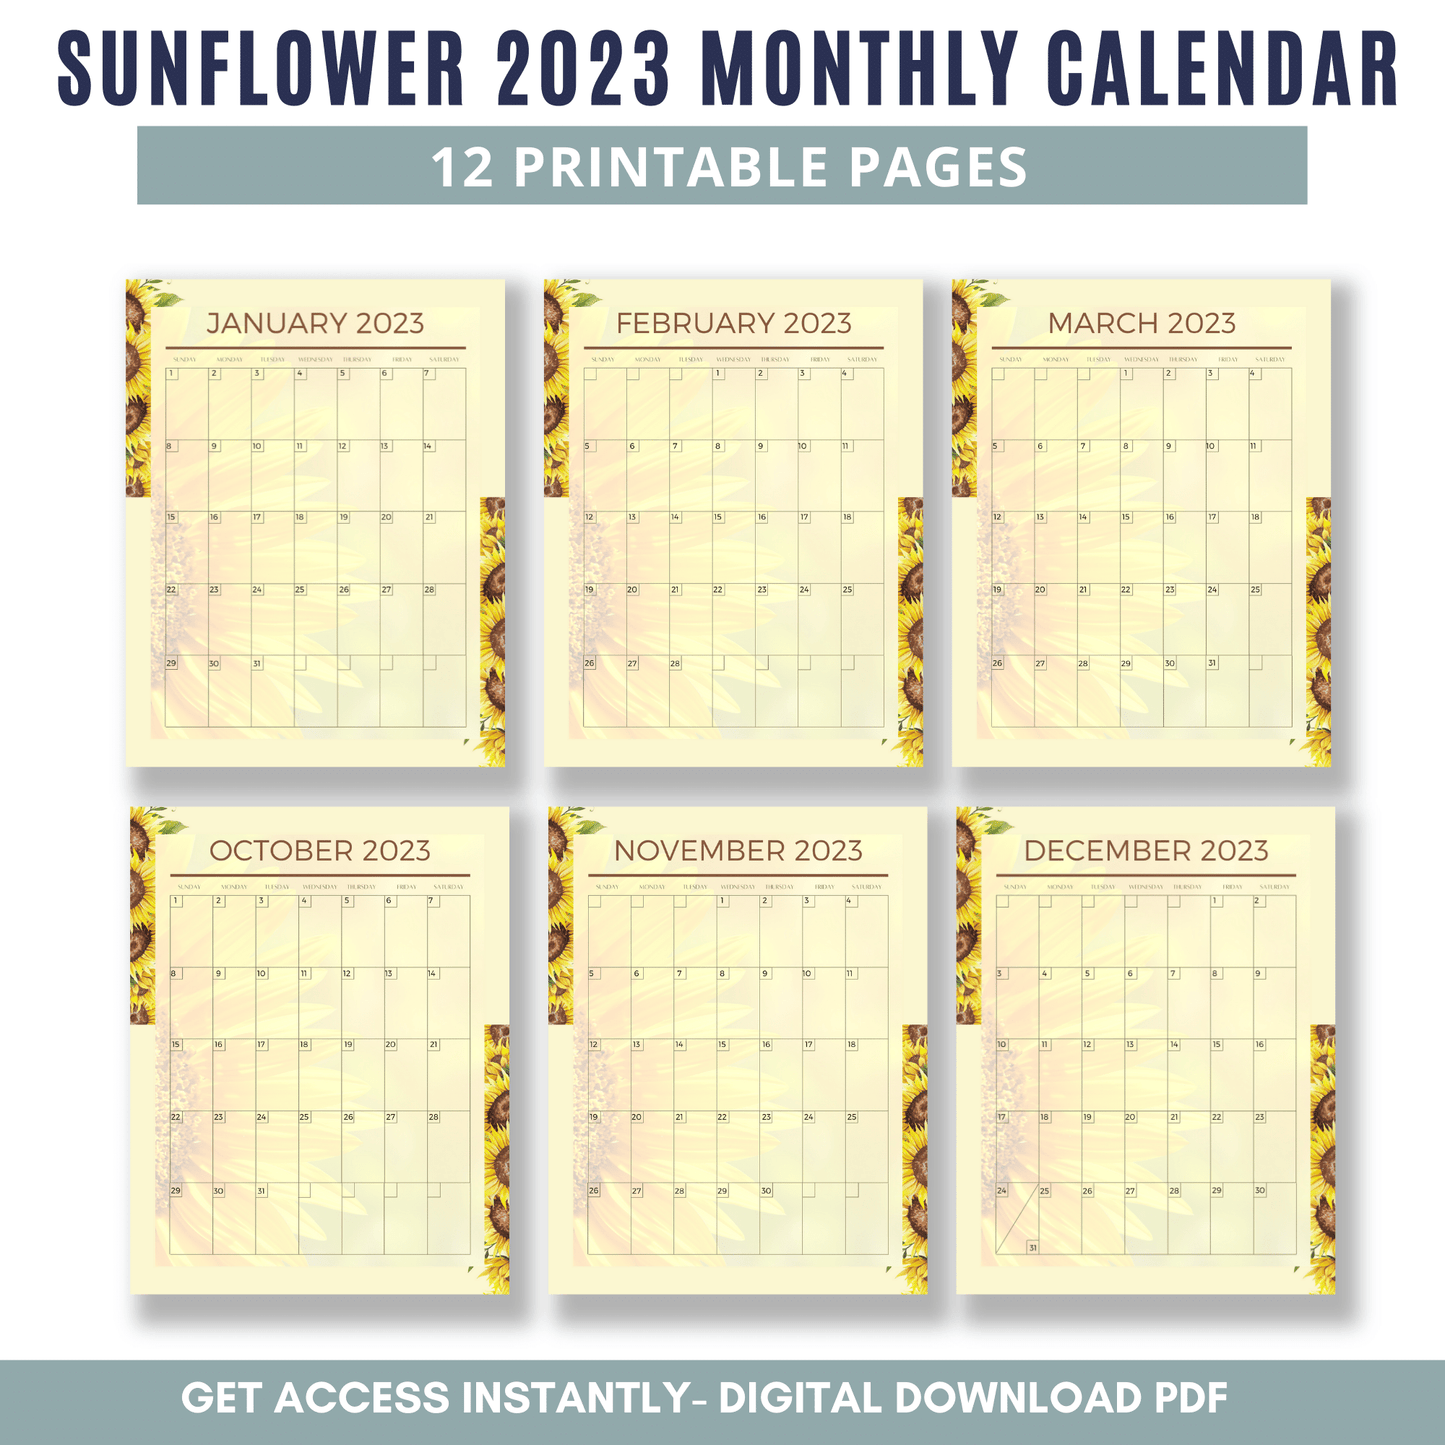 Sunflower 2023 Monthly Calendar